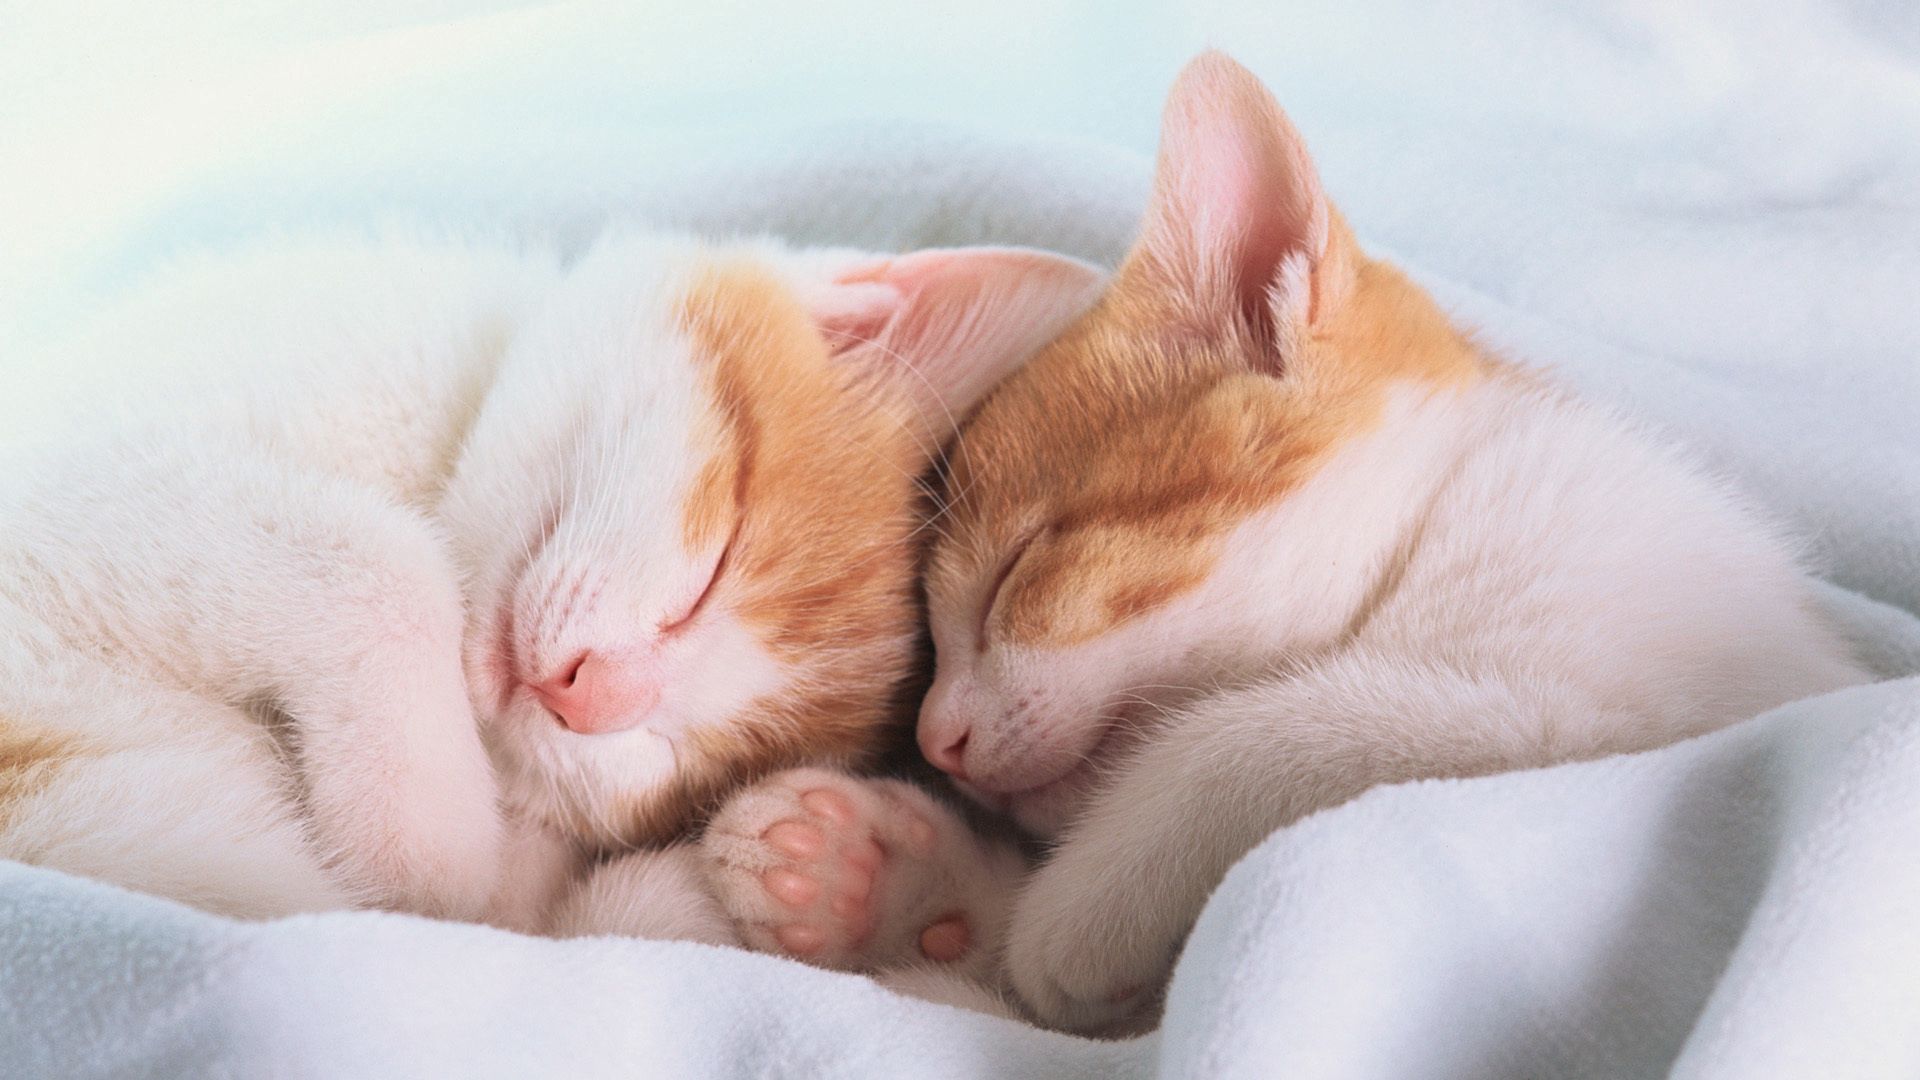 kittens, animals, ears, sleep, dream, paws, blanket, are sleeping